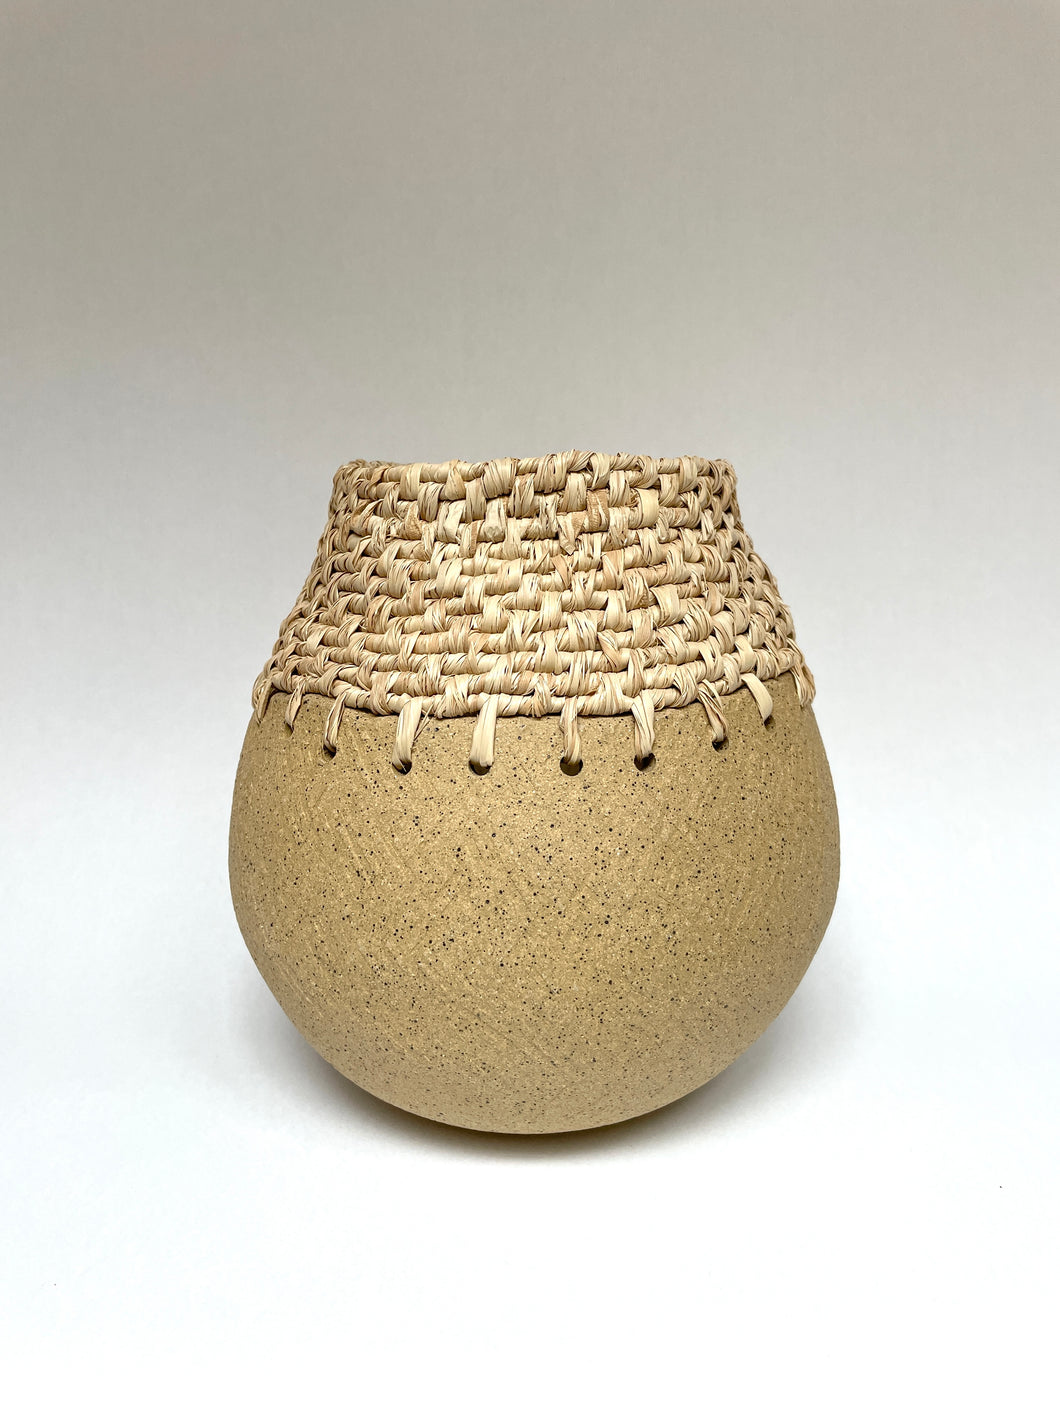 Handbuilt vase with raffia weaving